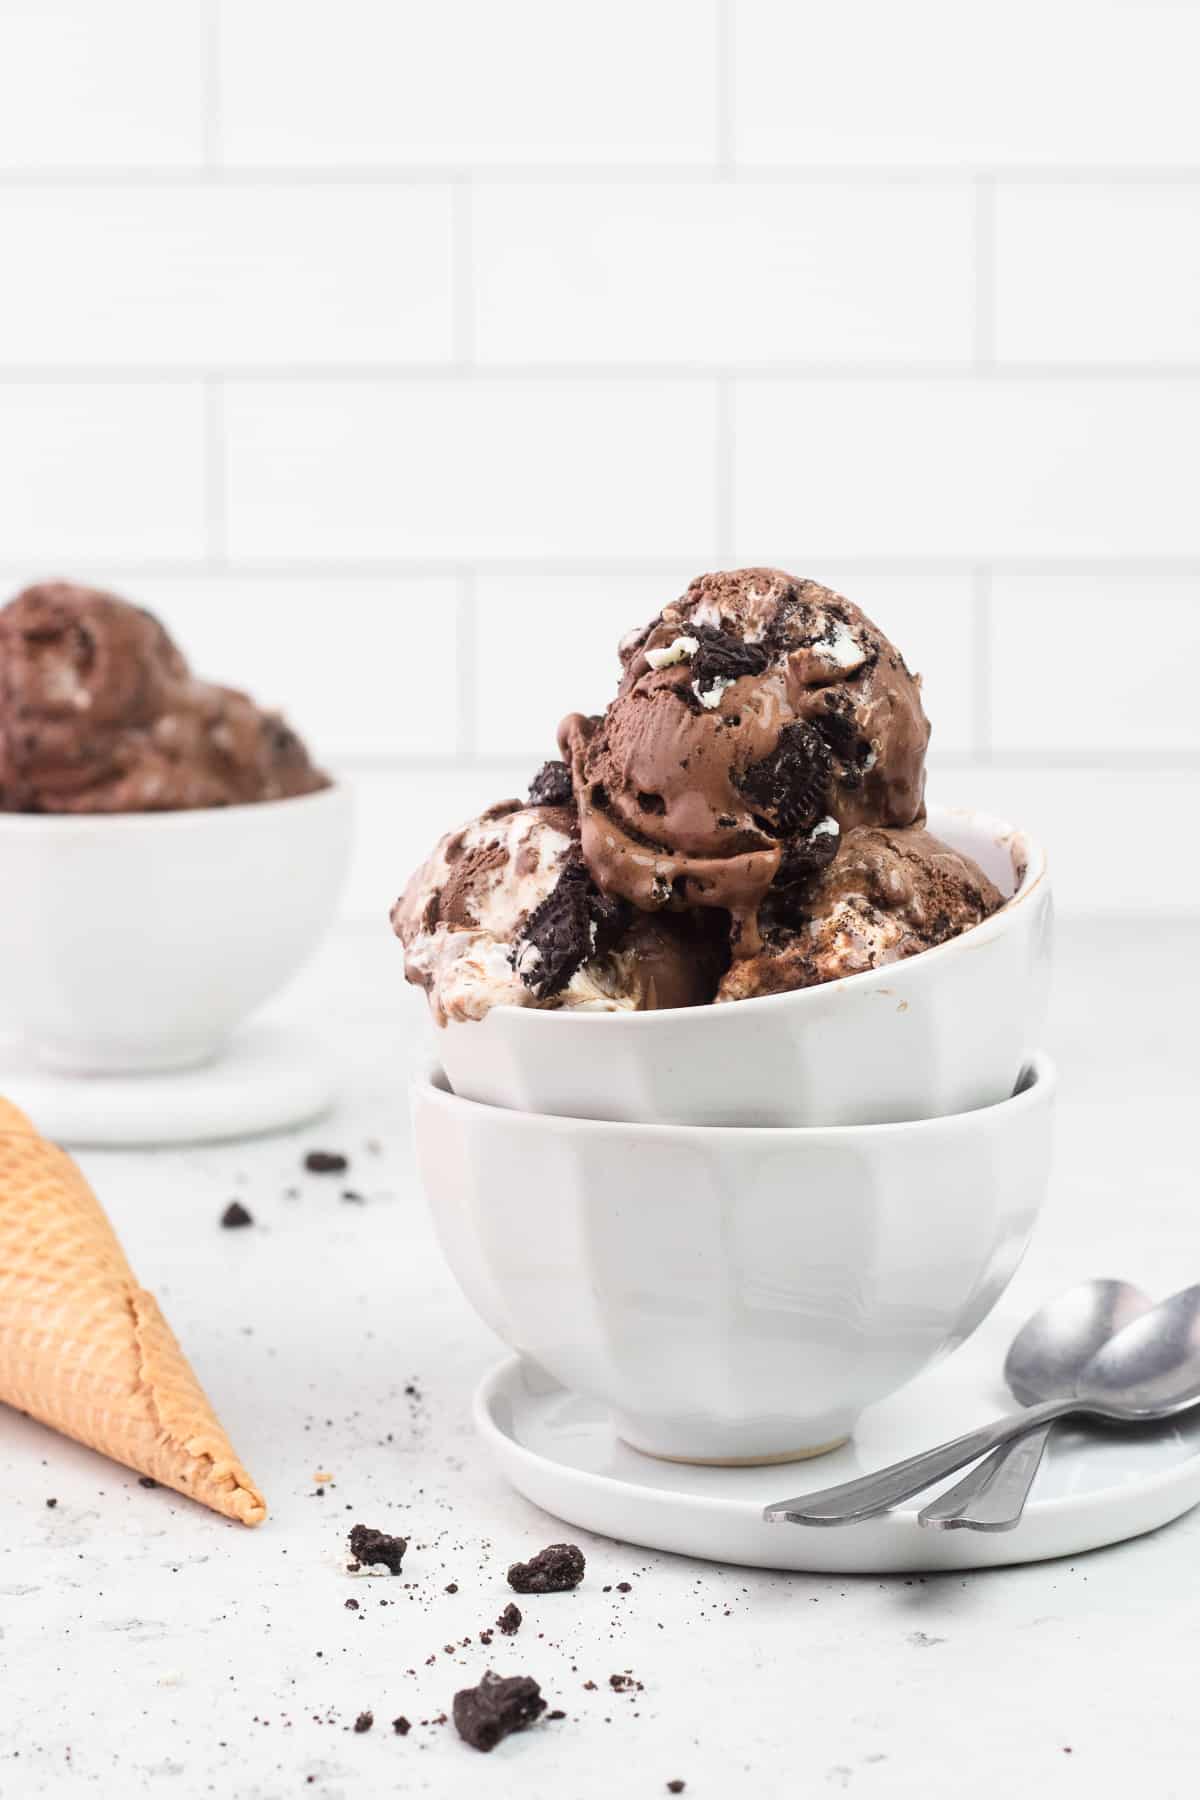 Chocolate Ice Cream with Oreos and Marshmallow